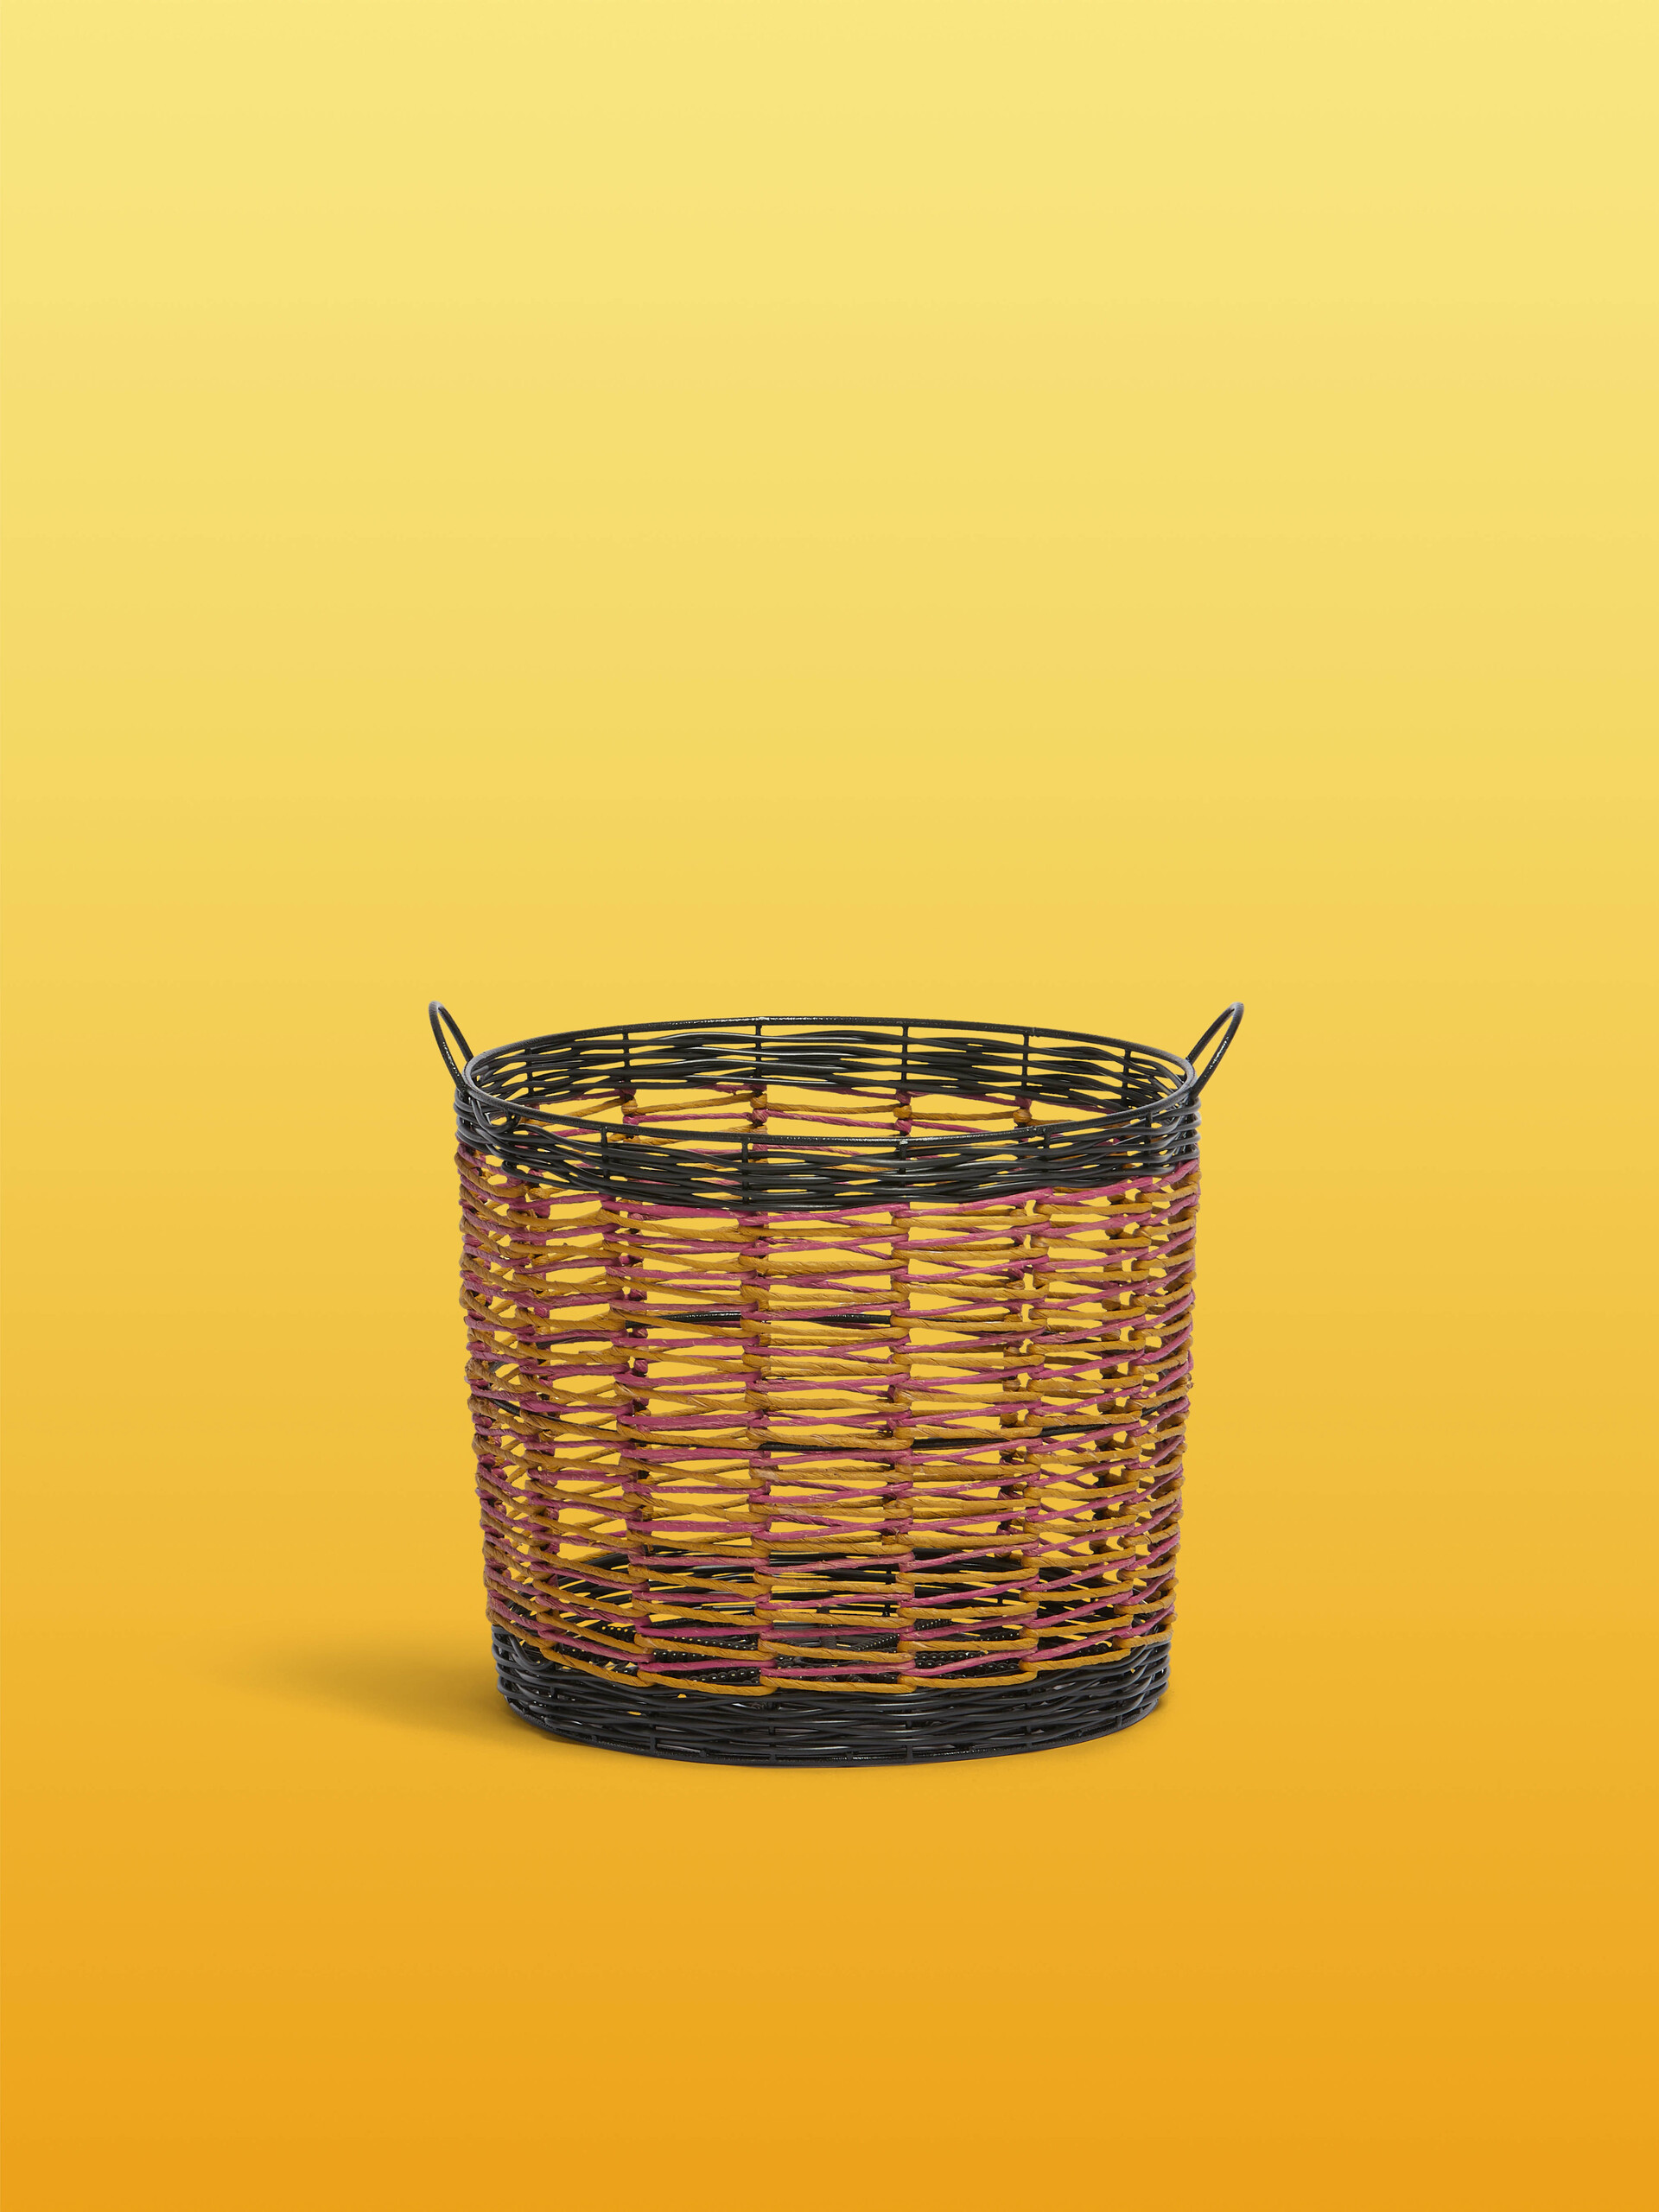 Pink and yellow Marni Market round storage basket - Furniture - Image 1